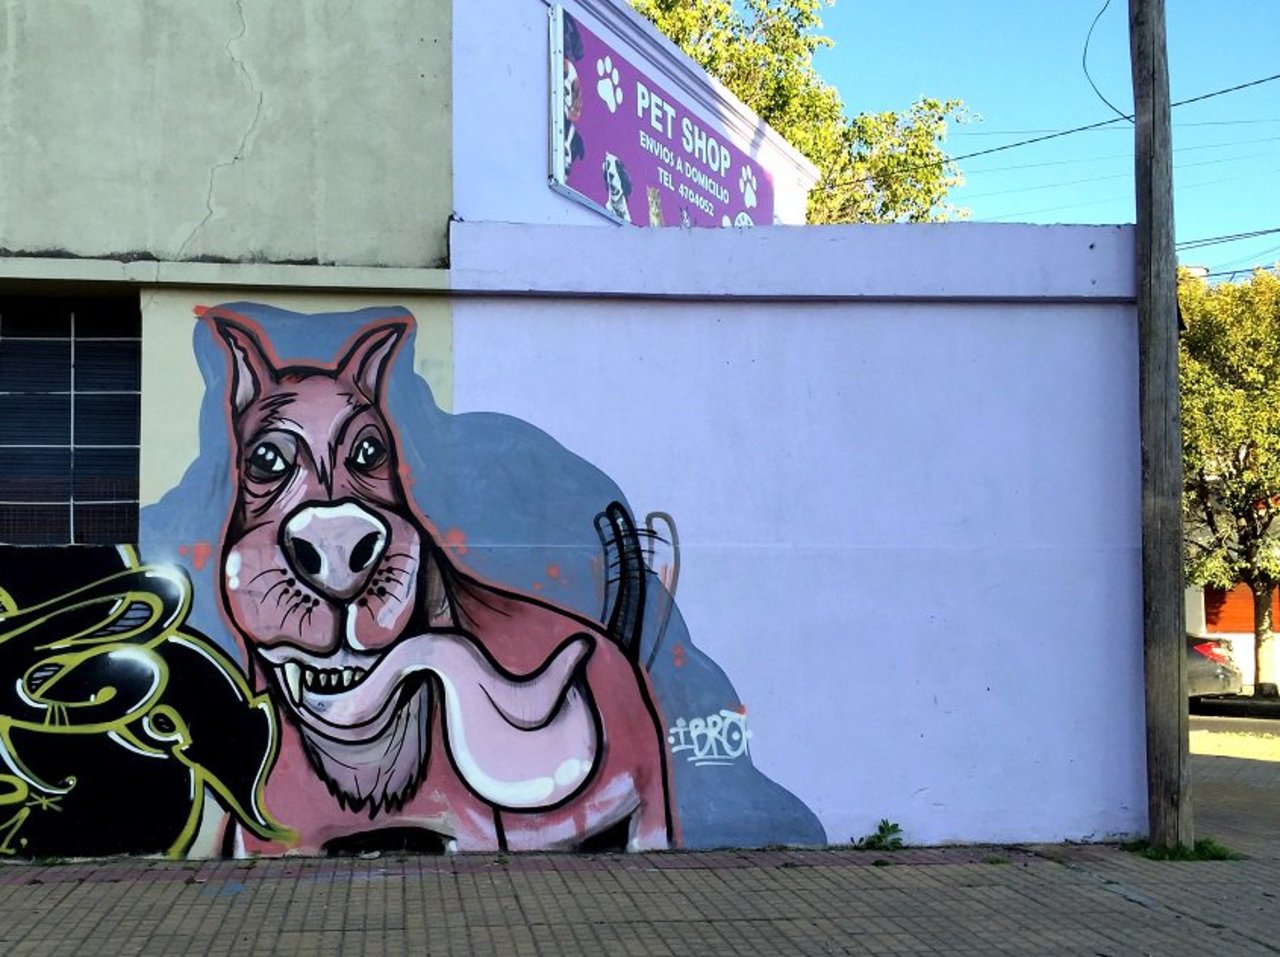 #Graffiti de hoy: << Man’s best friend >> Diag. 76y46 #LaPlata #Argentina #StreetArt #UrbanArt #ArteUrbano https://t.co/geZ7lv2cJW